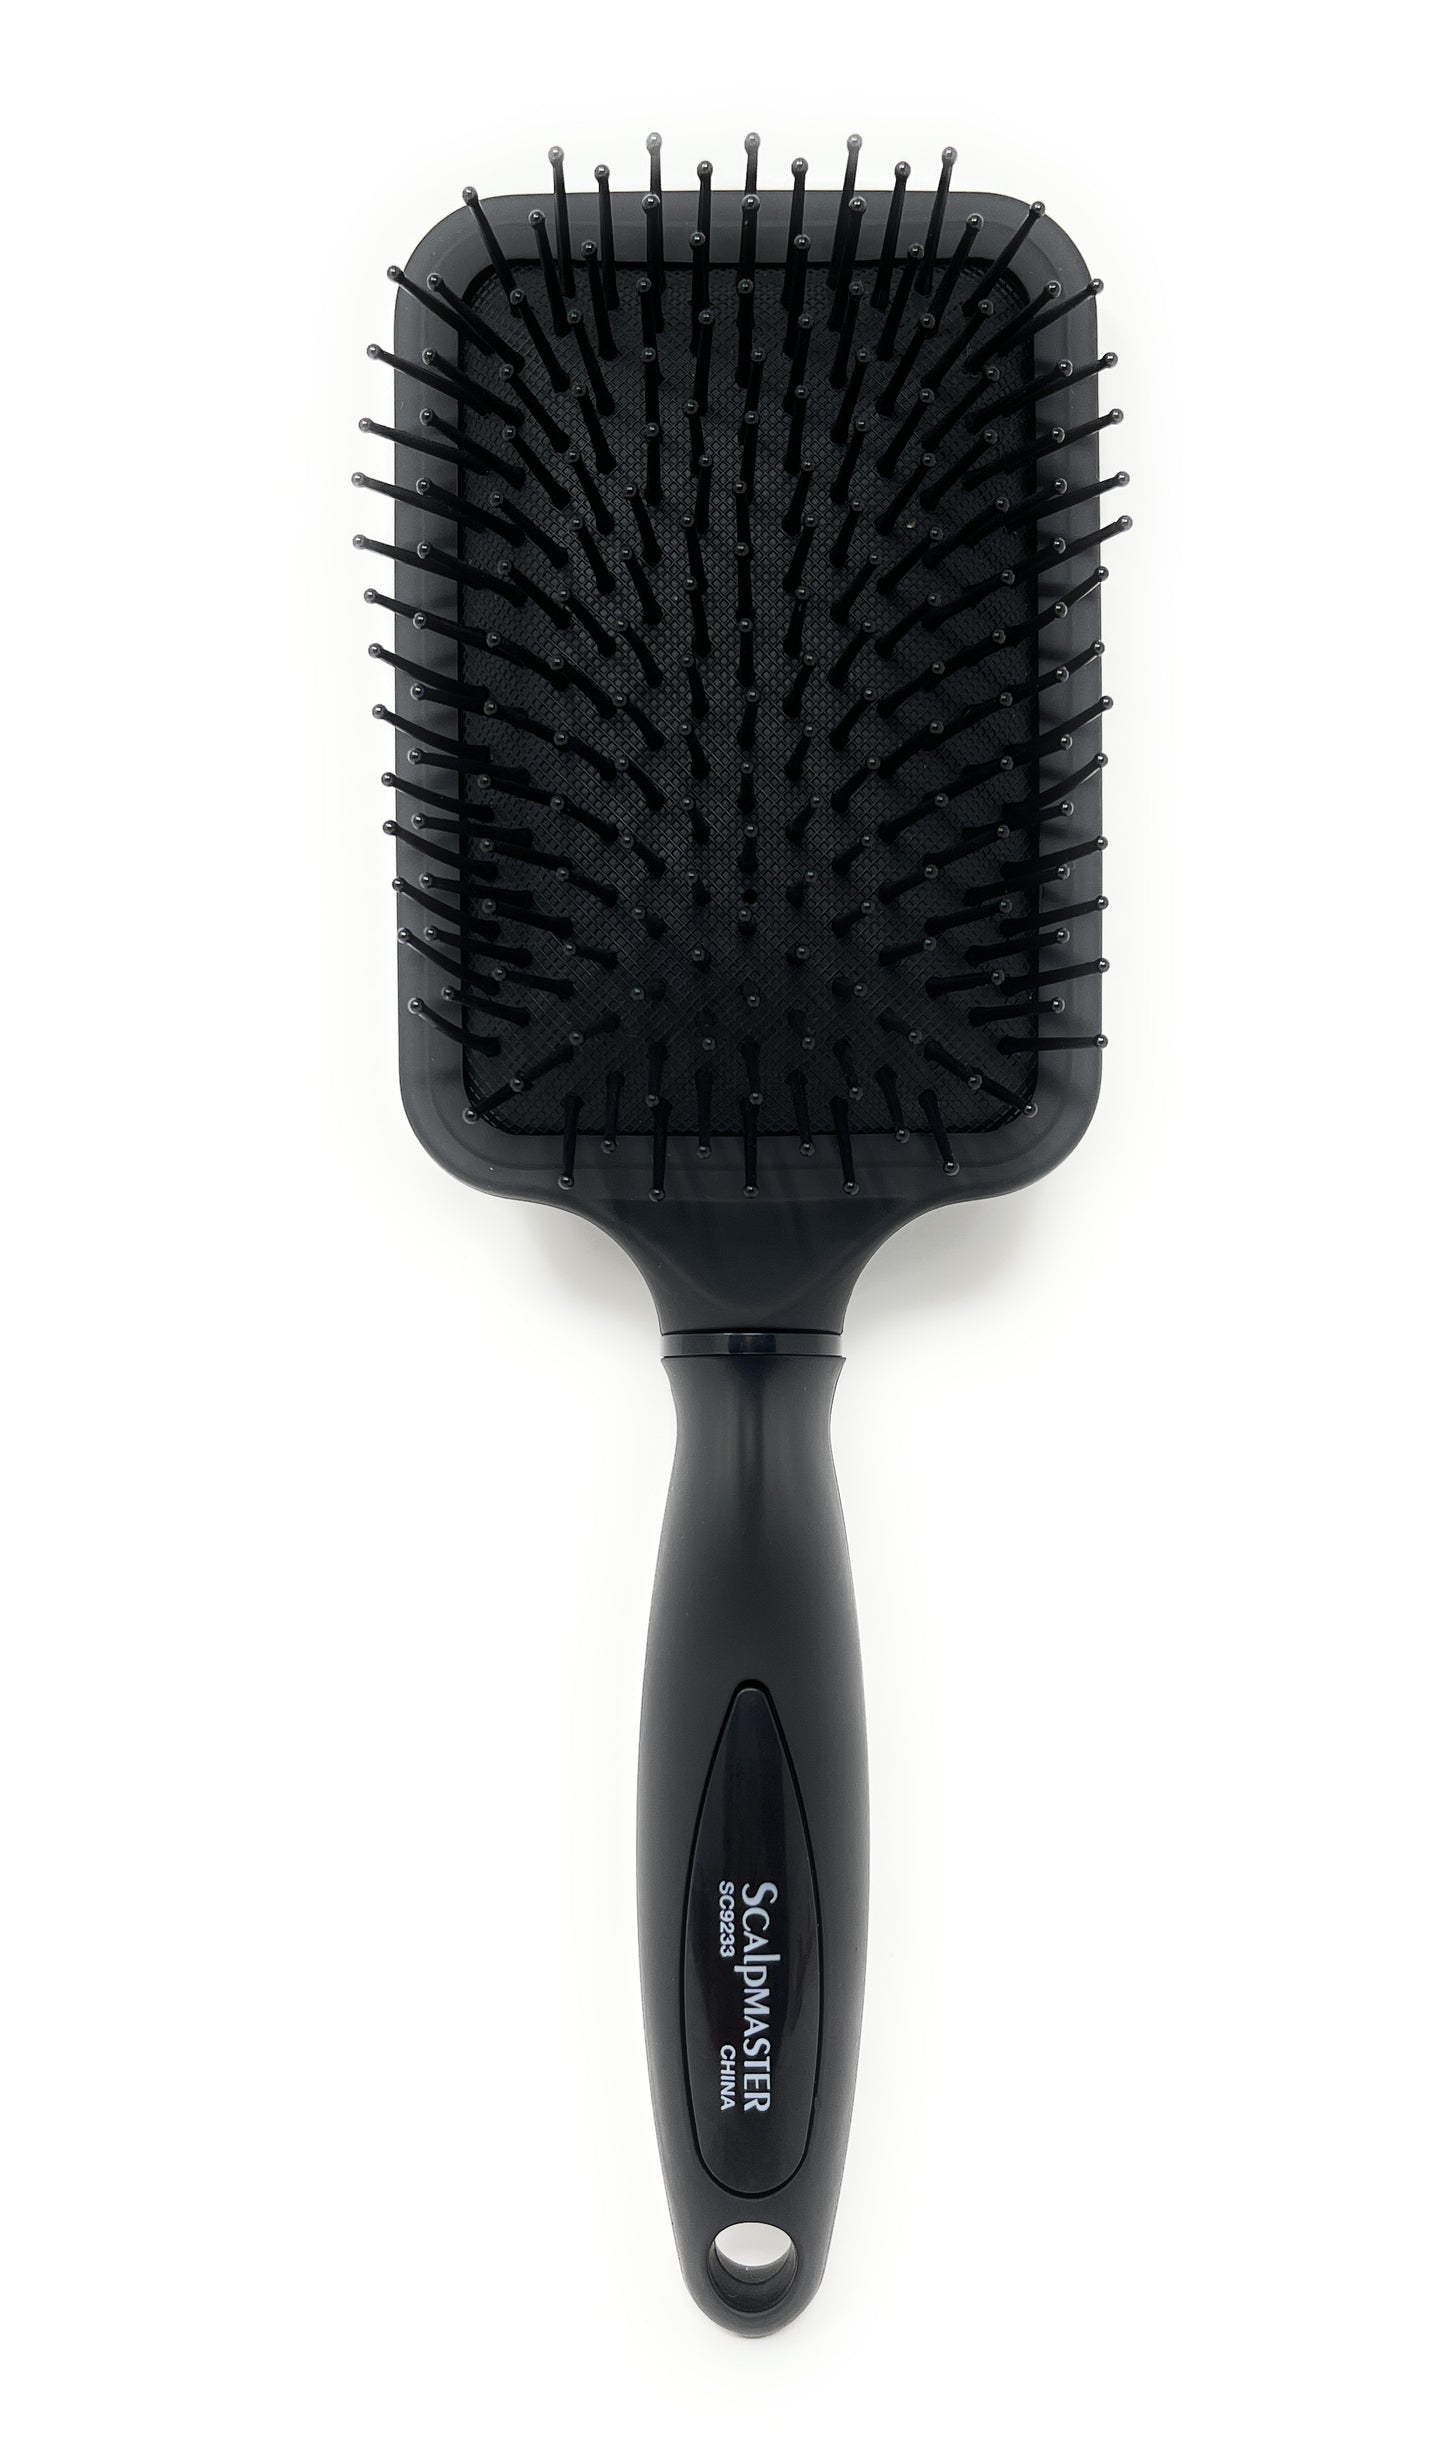 Scalpmaster 13-Row Ball-Tip Cushion Paddle Brush. Styling Brush Nylon Bristles Rich Black Rubberized Finish, Black. 1 Pc.